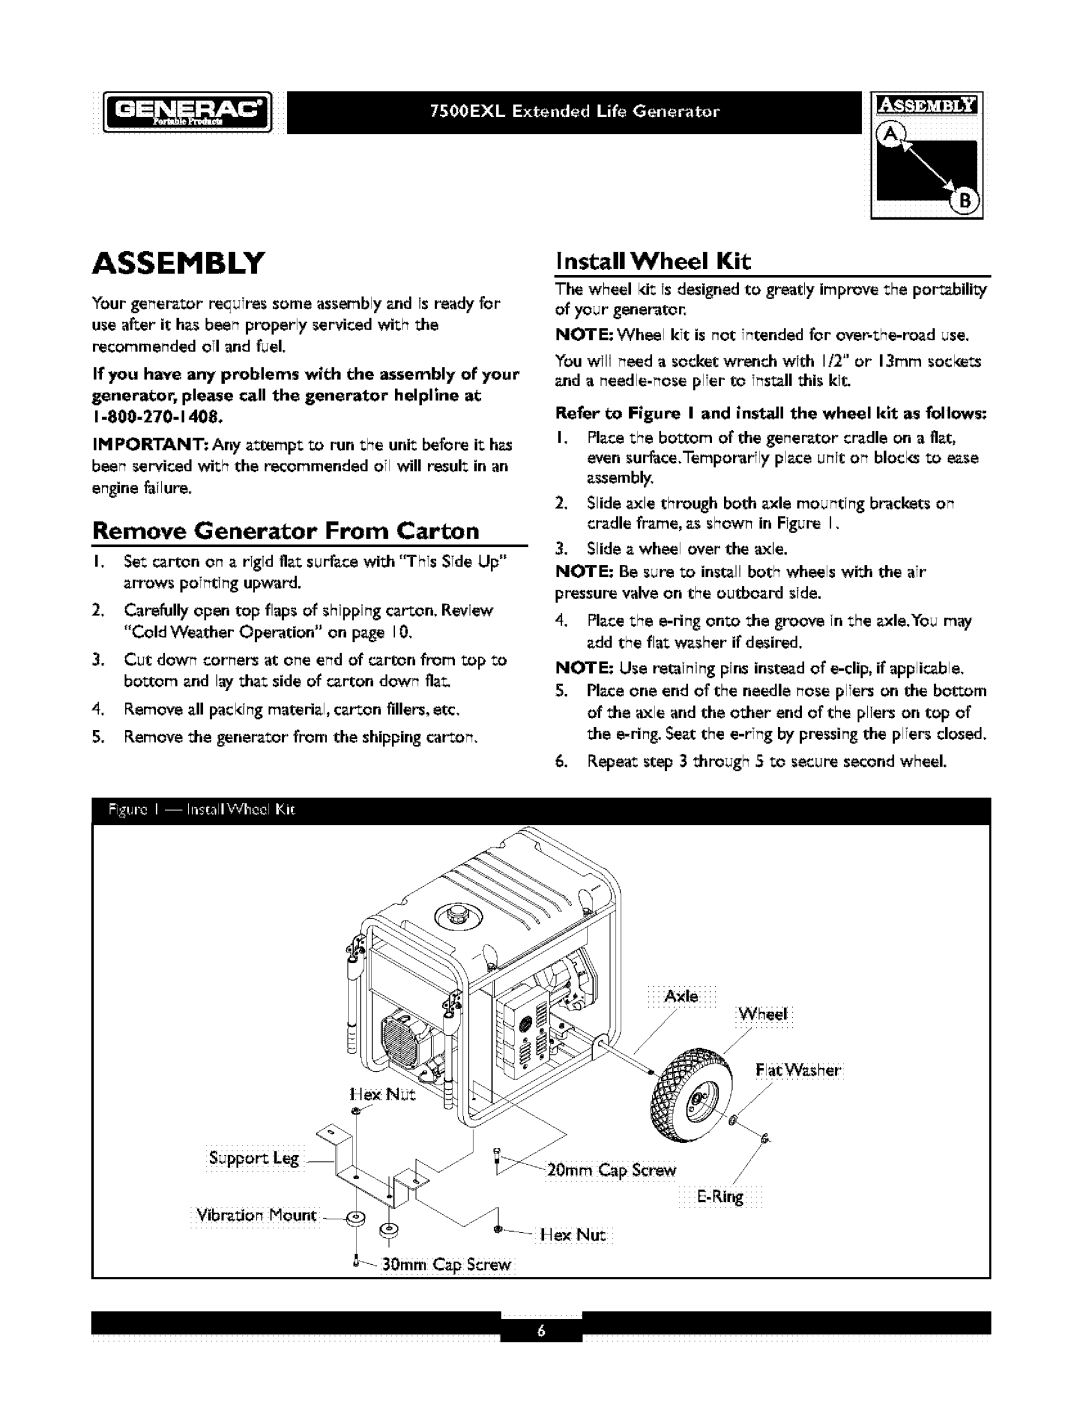 Generac 1019-3 owner manual Assembly, Remove Generator From Carton, Install Wheel Kit 